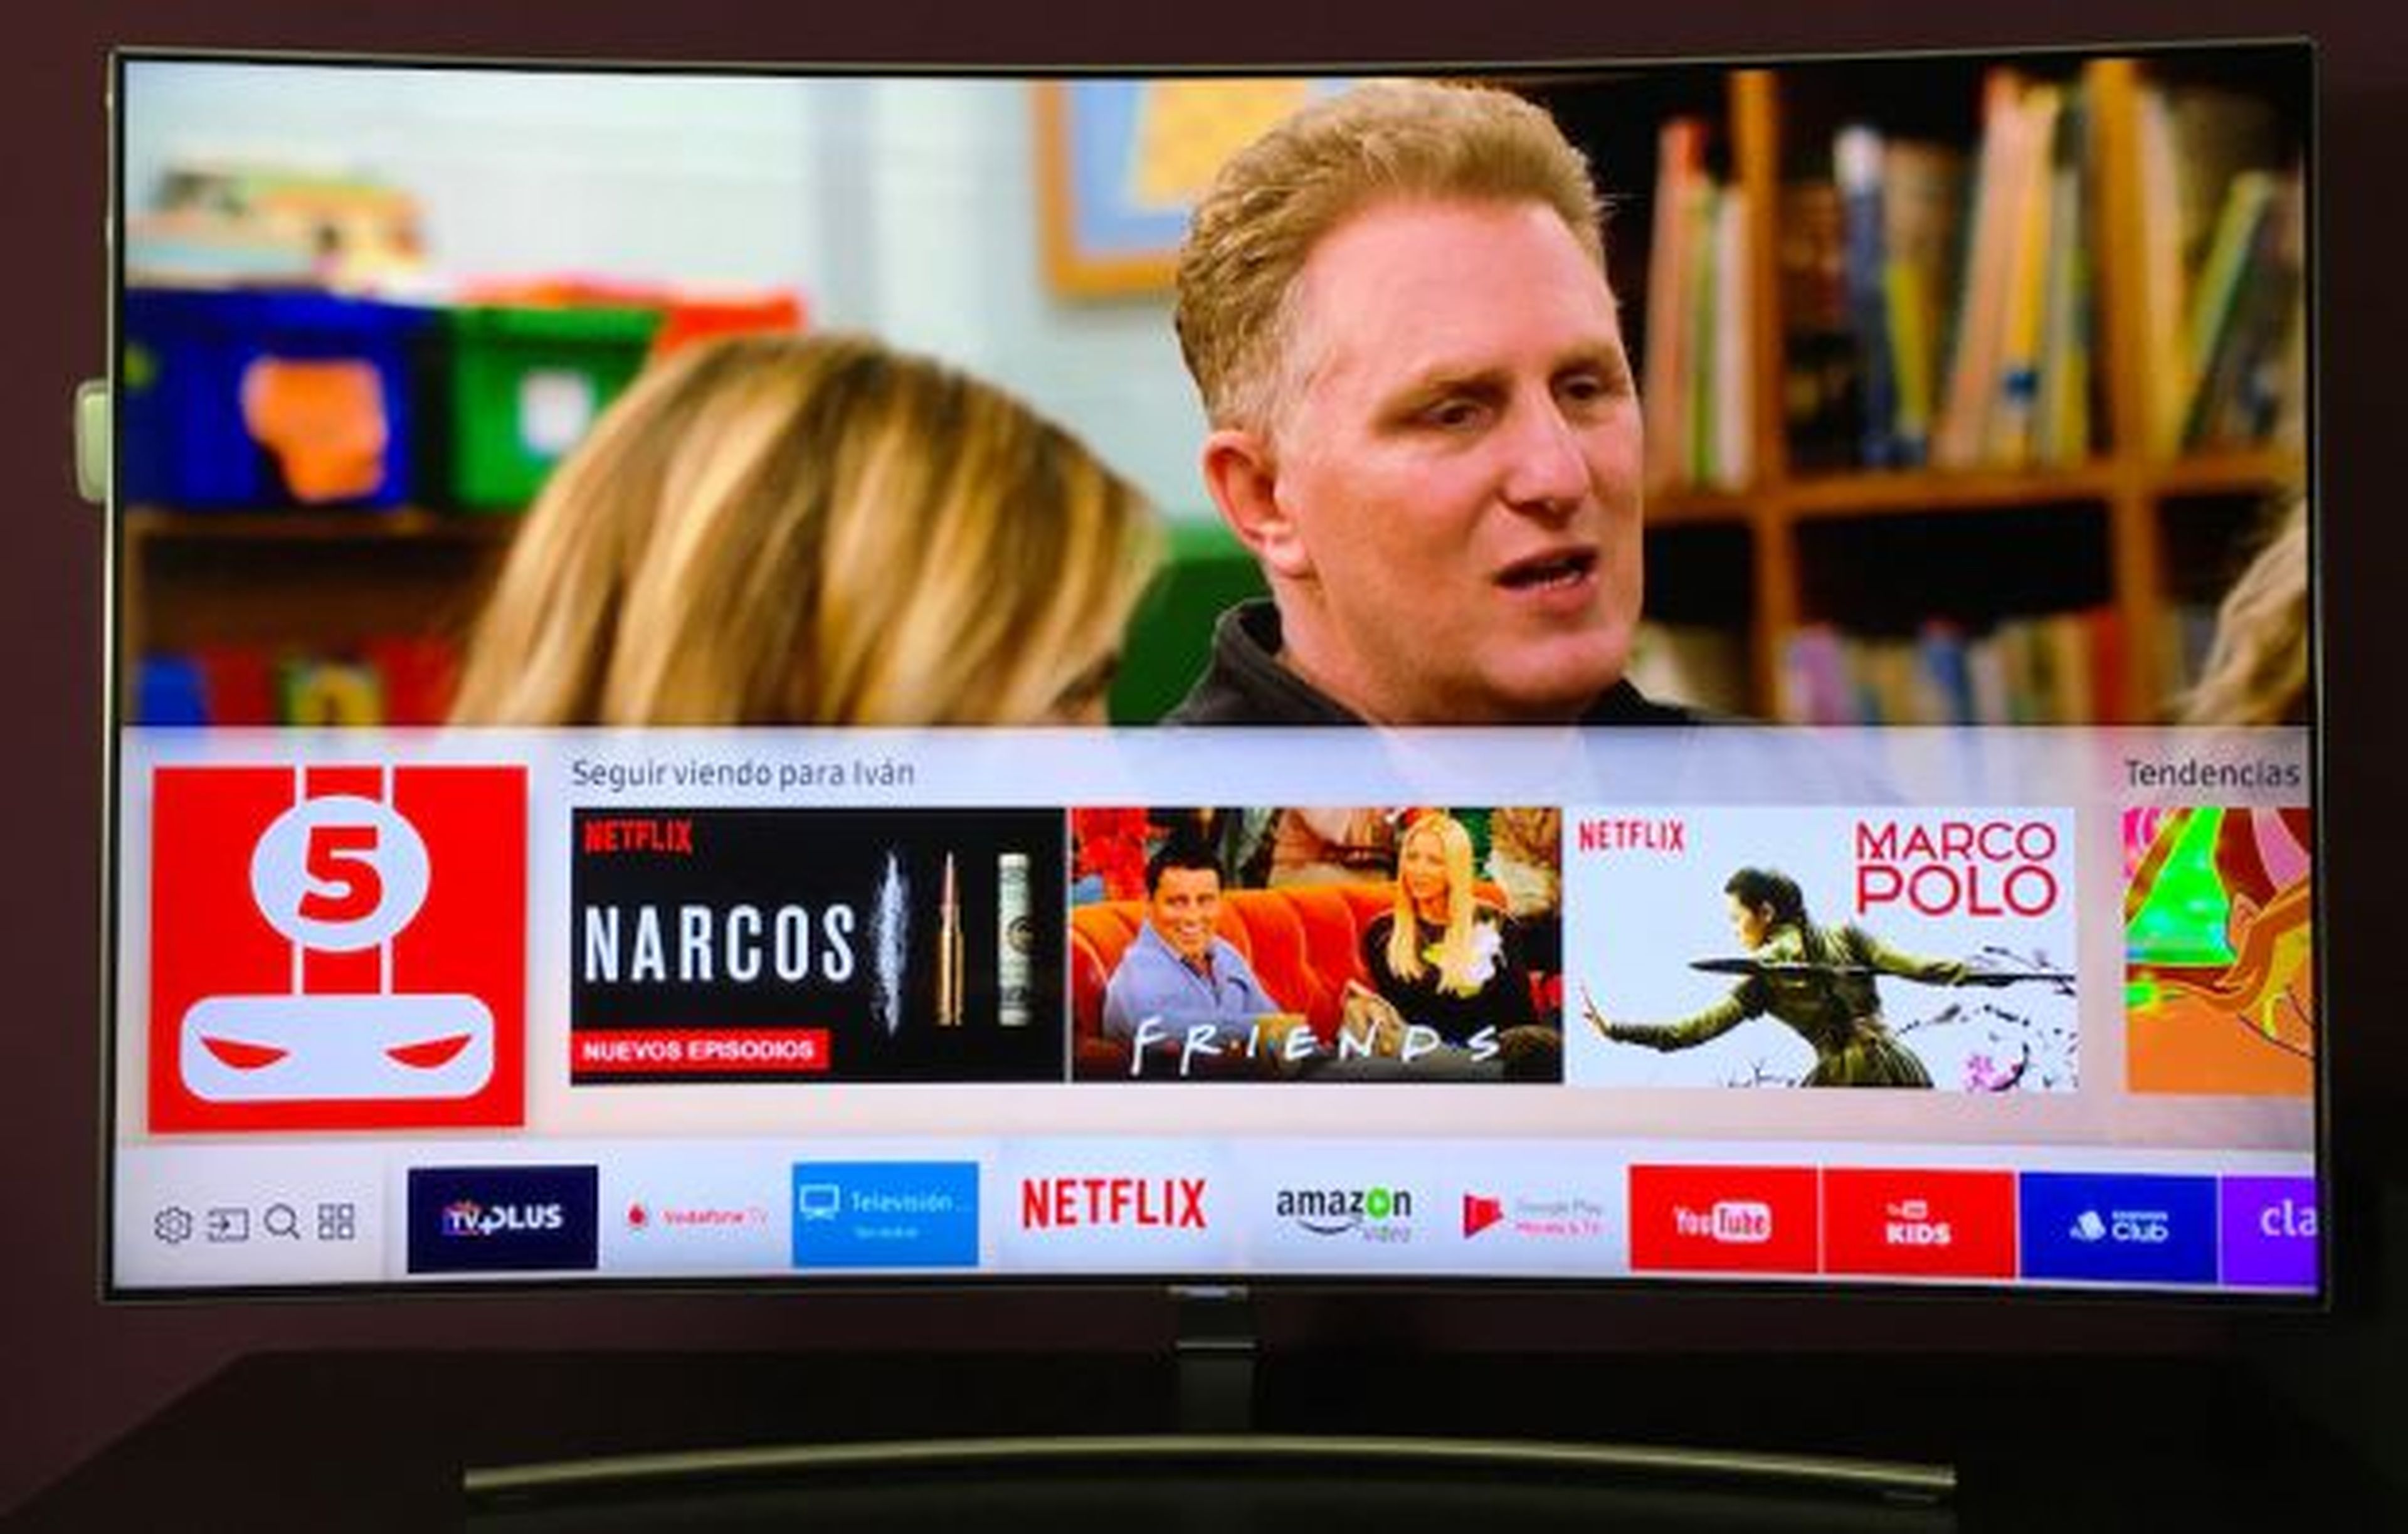 Netflix televisor inteligente QLED de Samsung